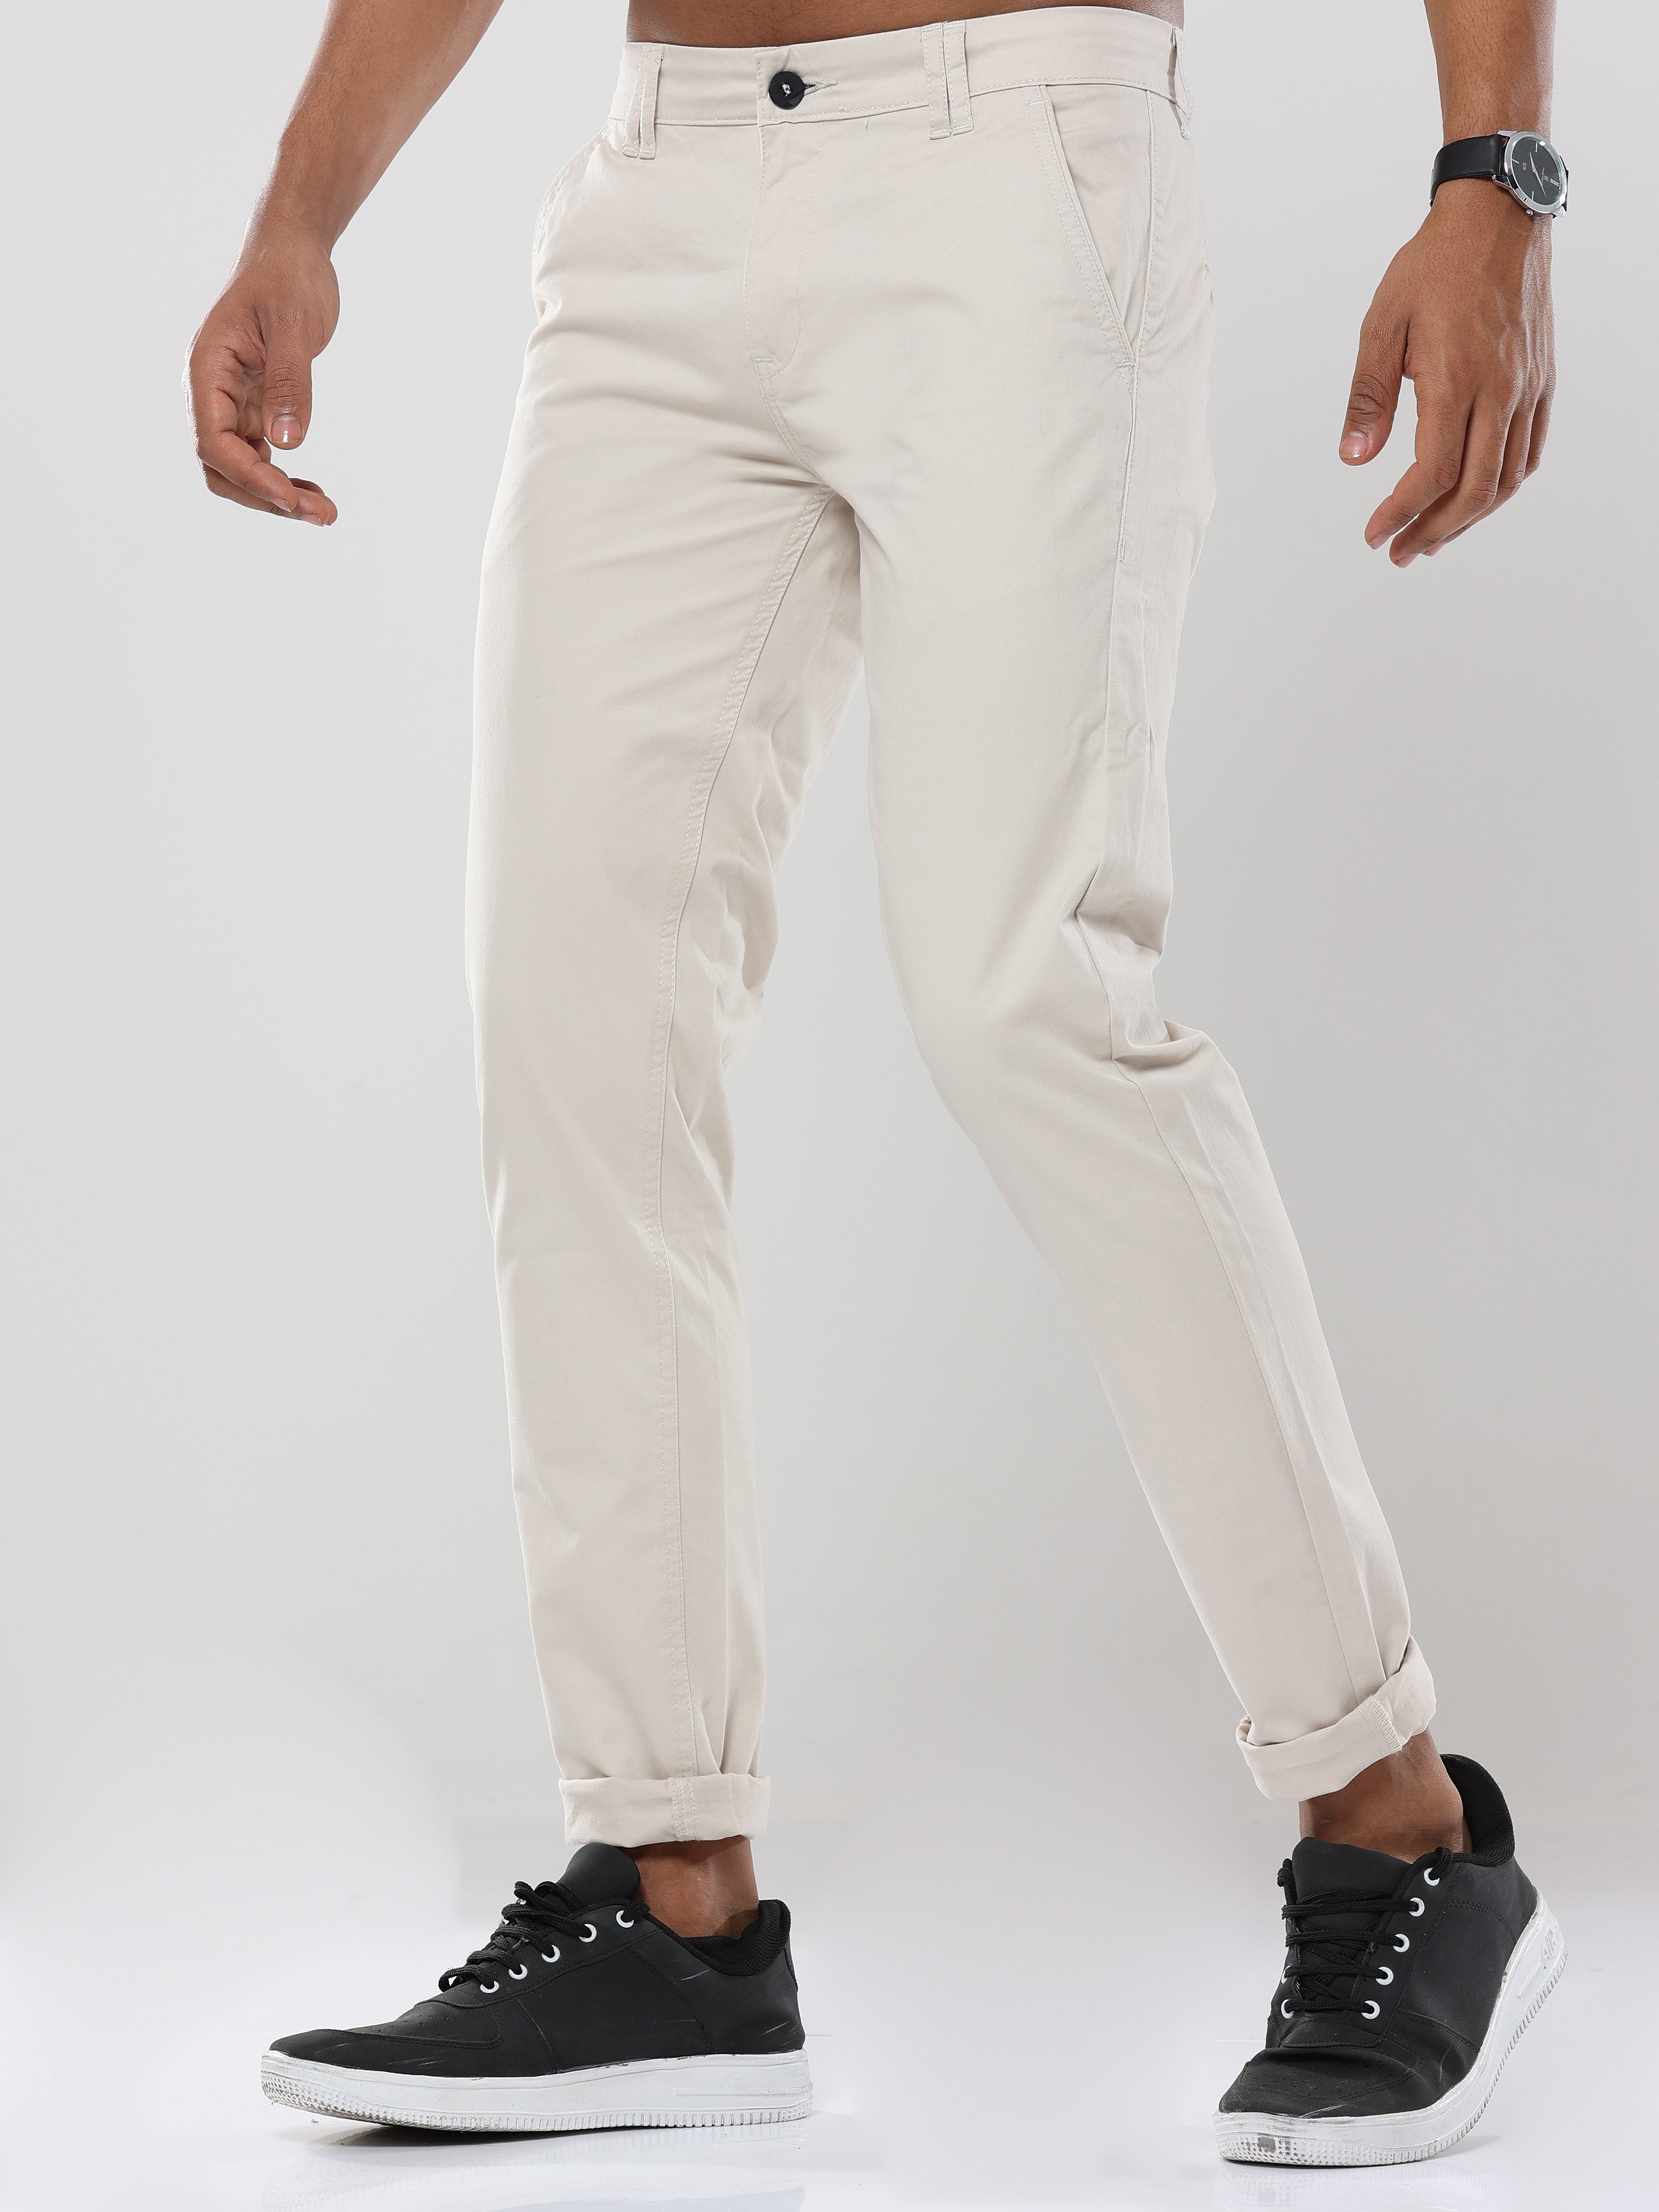 Men's Light Khaki Chino Pant - Classic Straight Fit | Southern Tide